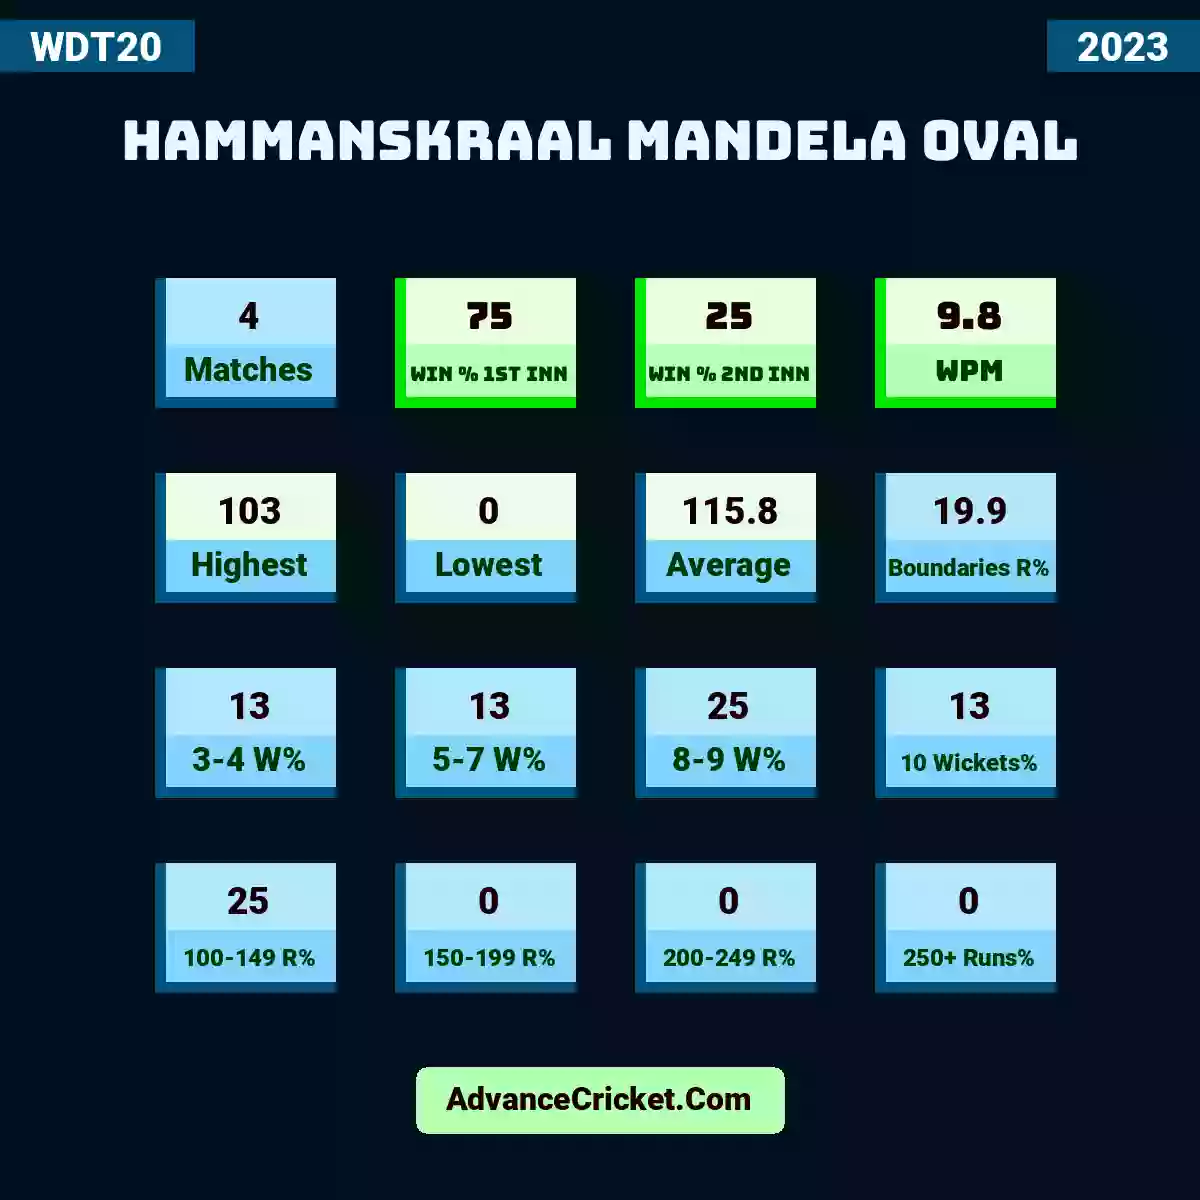 Image showing Hammanskraal Mandela Oval with Matches: 4, Win % 1st Inn: 75, Win % 2nd Inn: 25, WPM: 9.8, Highest: 103, Lowest: 0, Average: 115.8, Boundaries R%: 19.9, 3-4 W%: 13, 5-7 W%: 13, 8-9 W%: 25, 10 Wickets%: 13, 100-149 R%: 25, 150-199 R%: 0, 200-249 R%: 0, 250+ Runs%: 0.